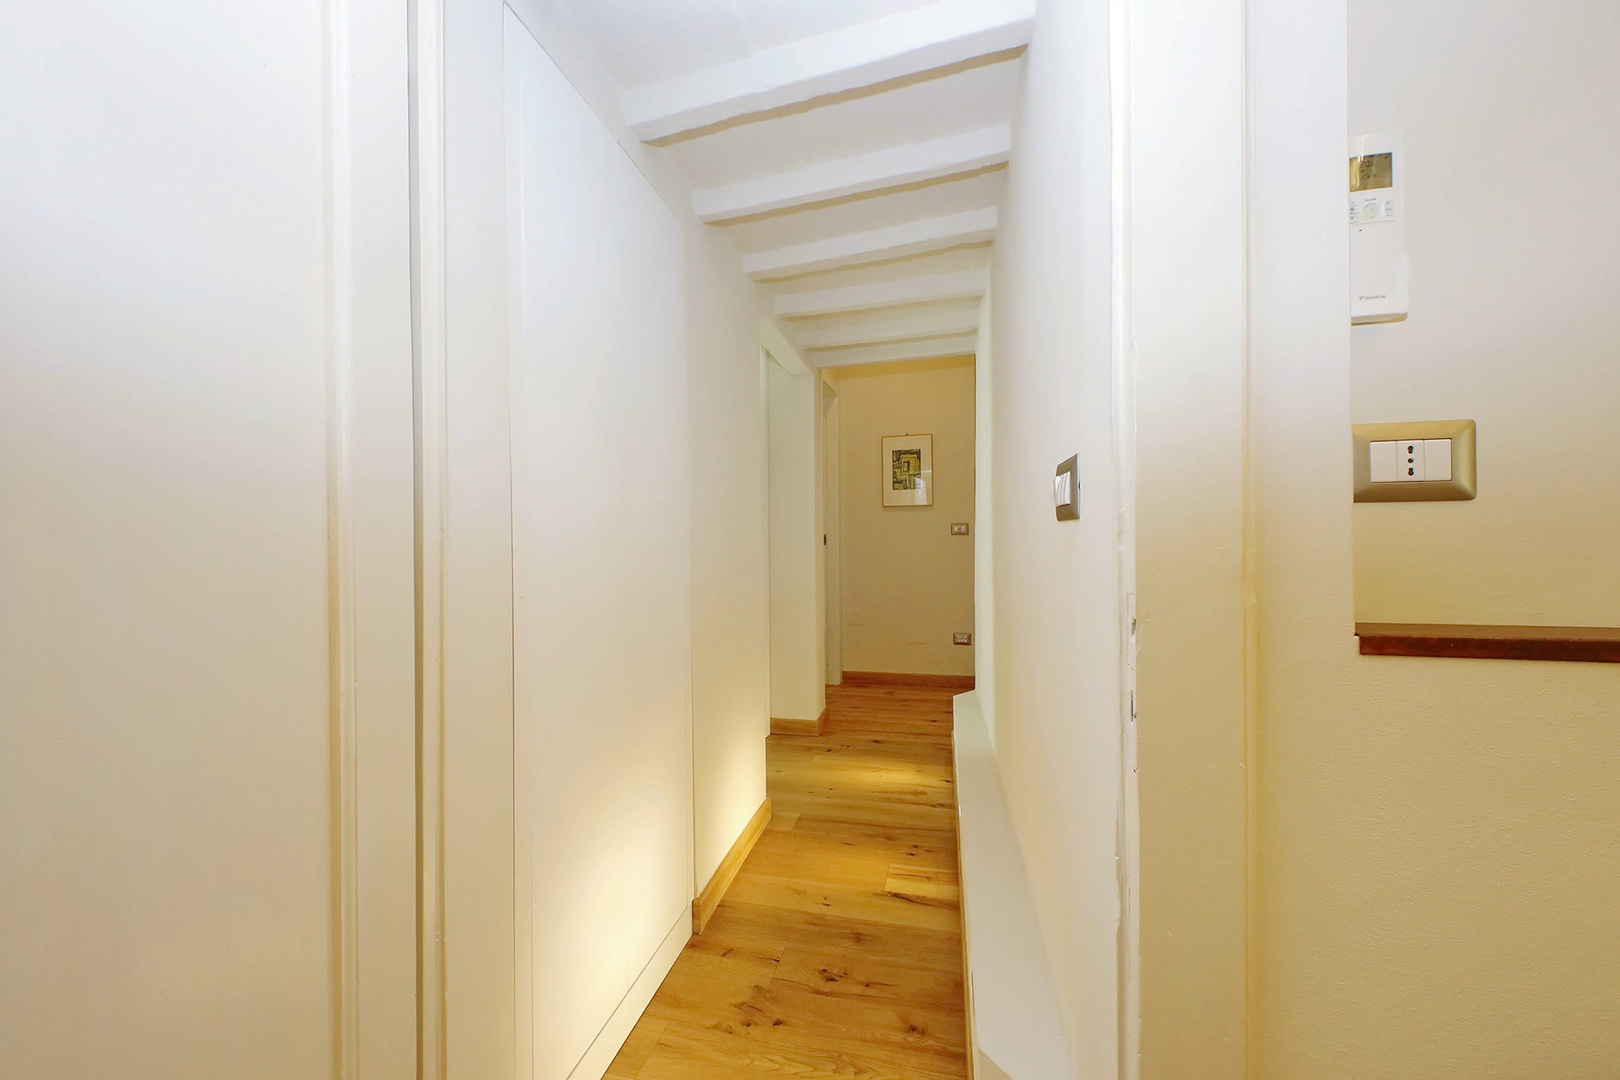 Bright hallway leading to bedrooms